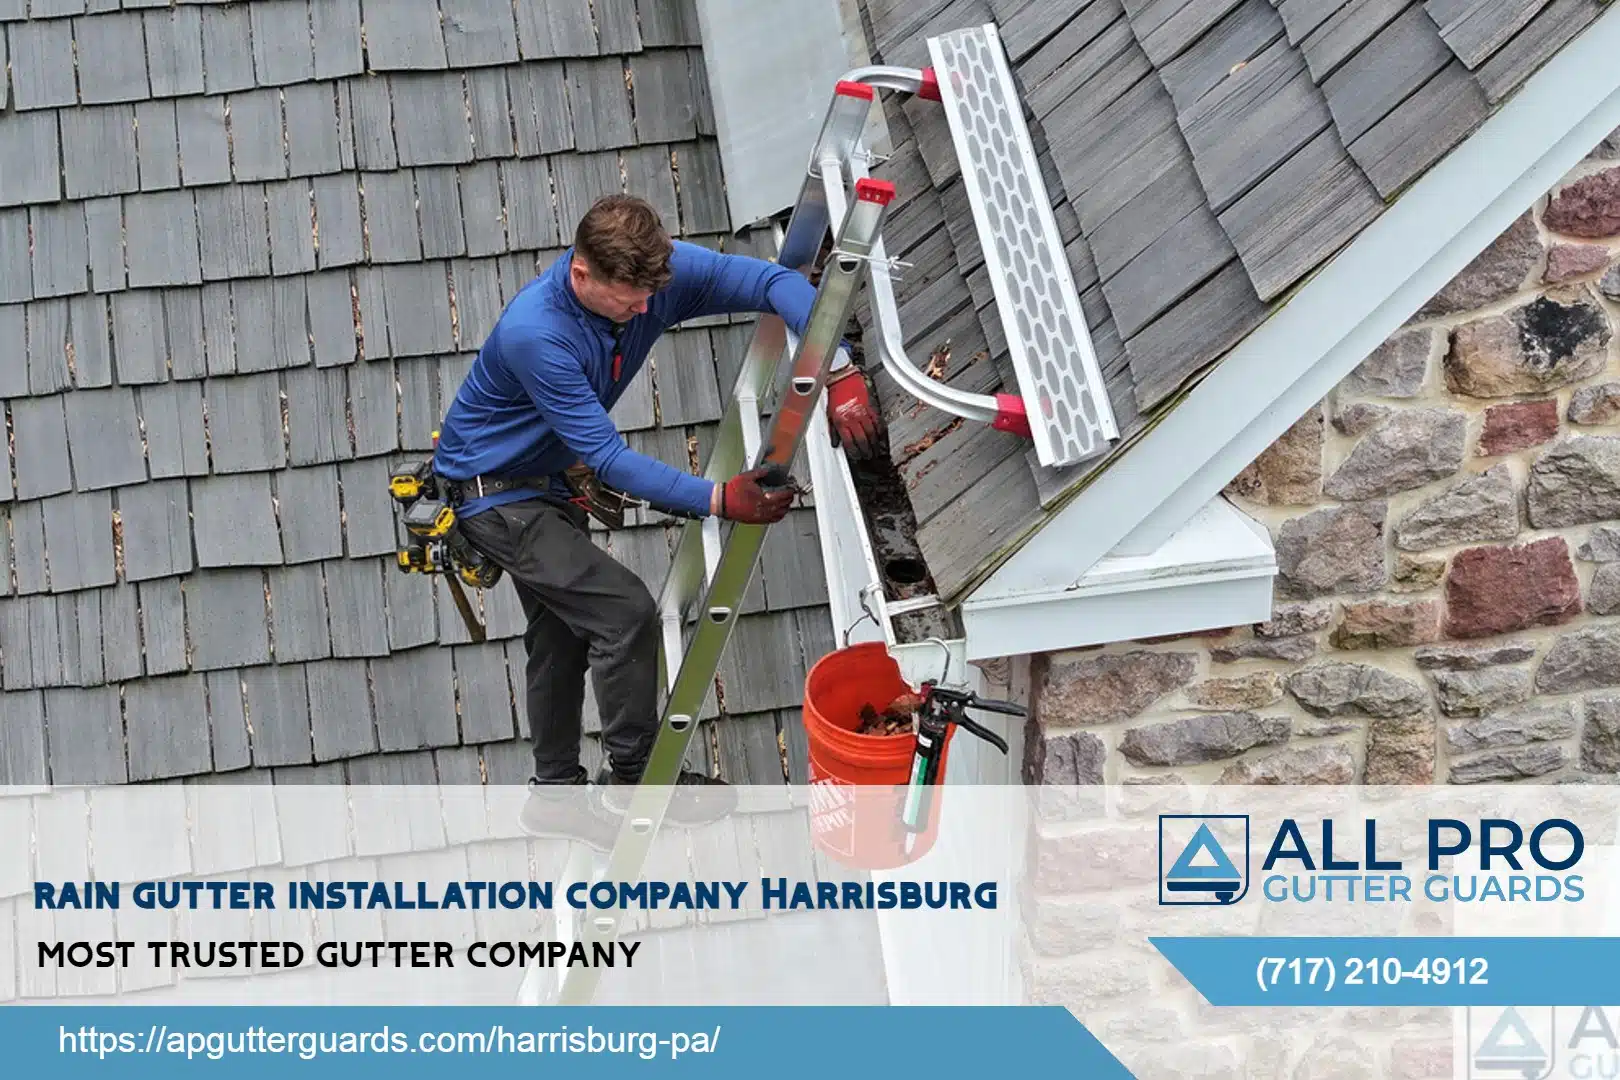 all pro gutter guards harrisburg pa best gutter cleaning company best rain gutter installation company